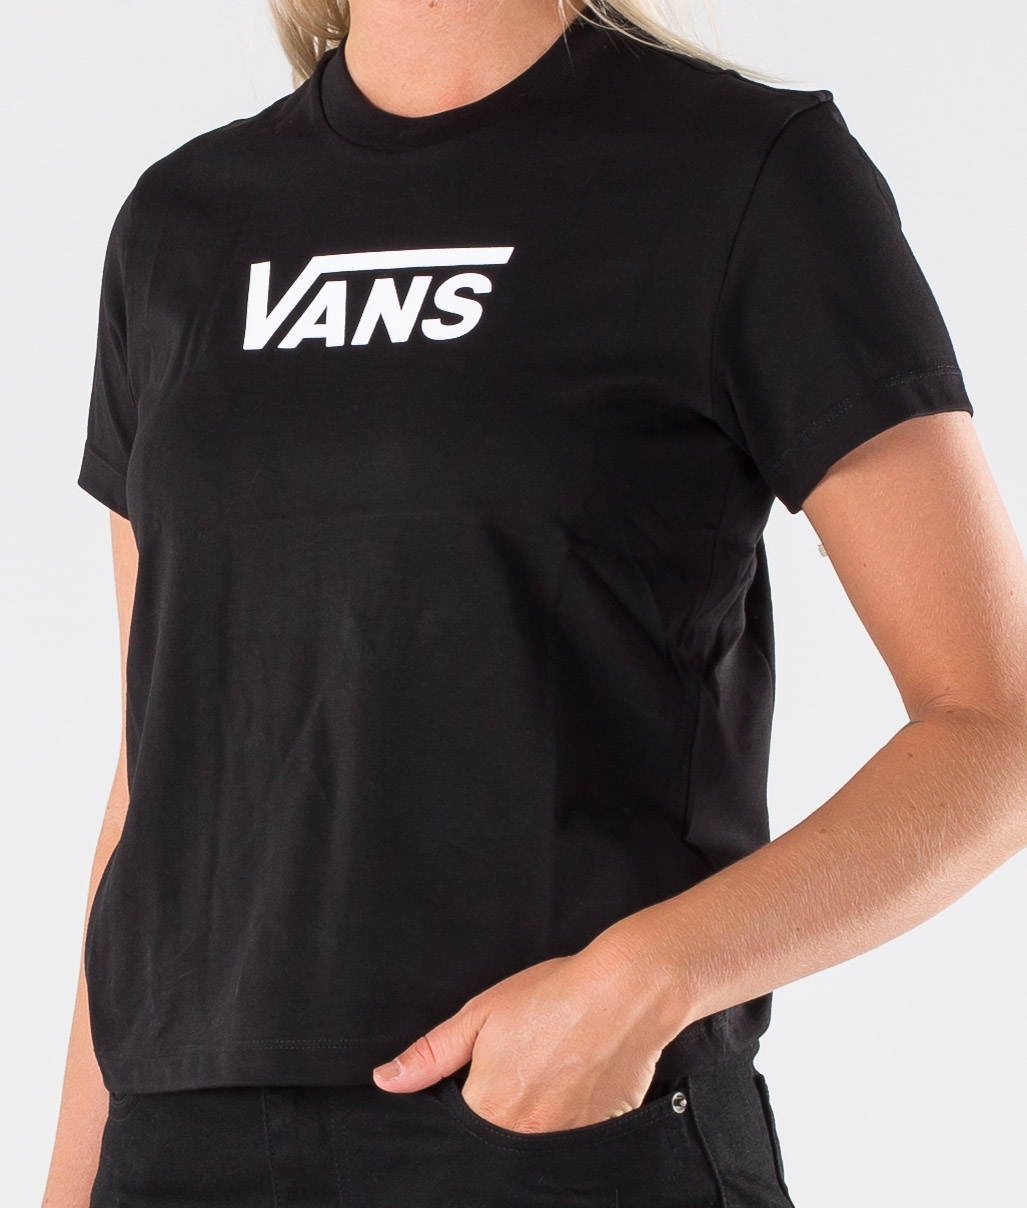 vans classic t shirt women's